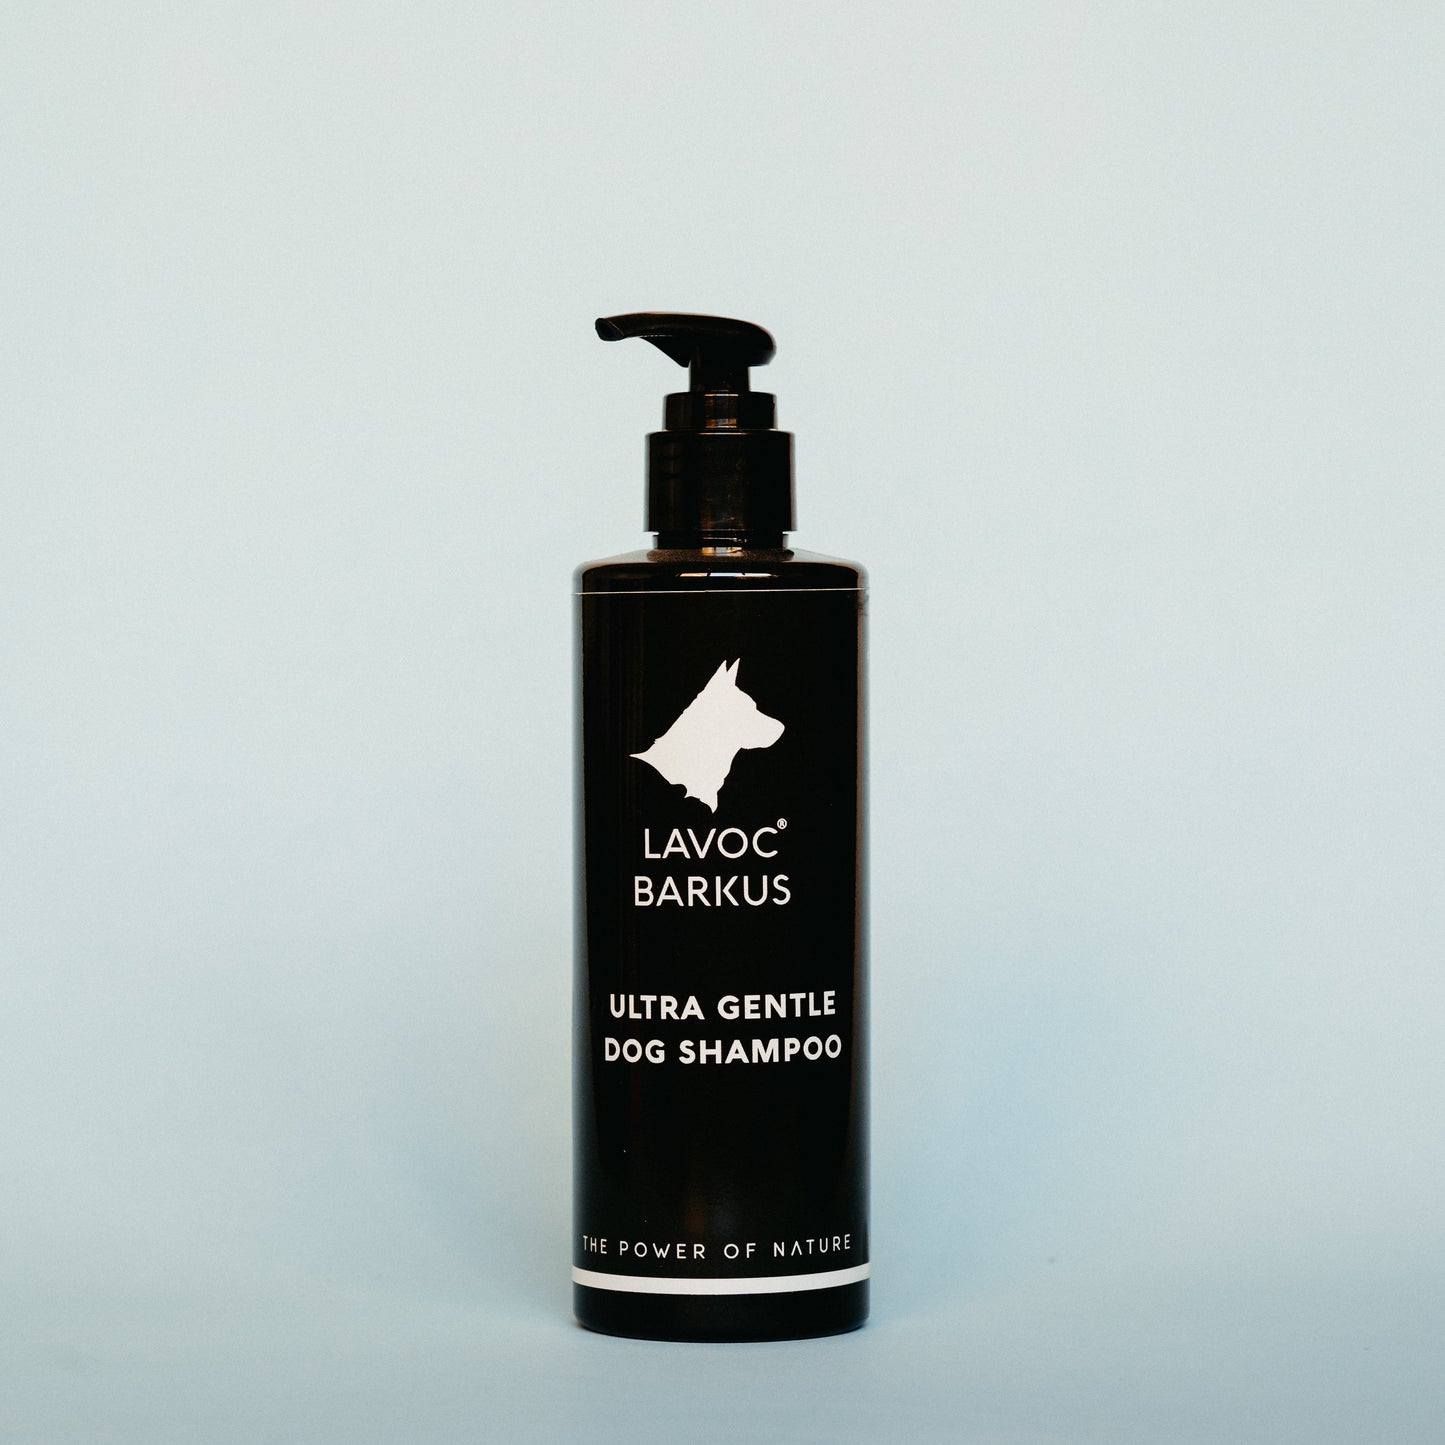 Lavoc Barkus Dog Shampoo